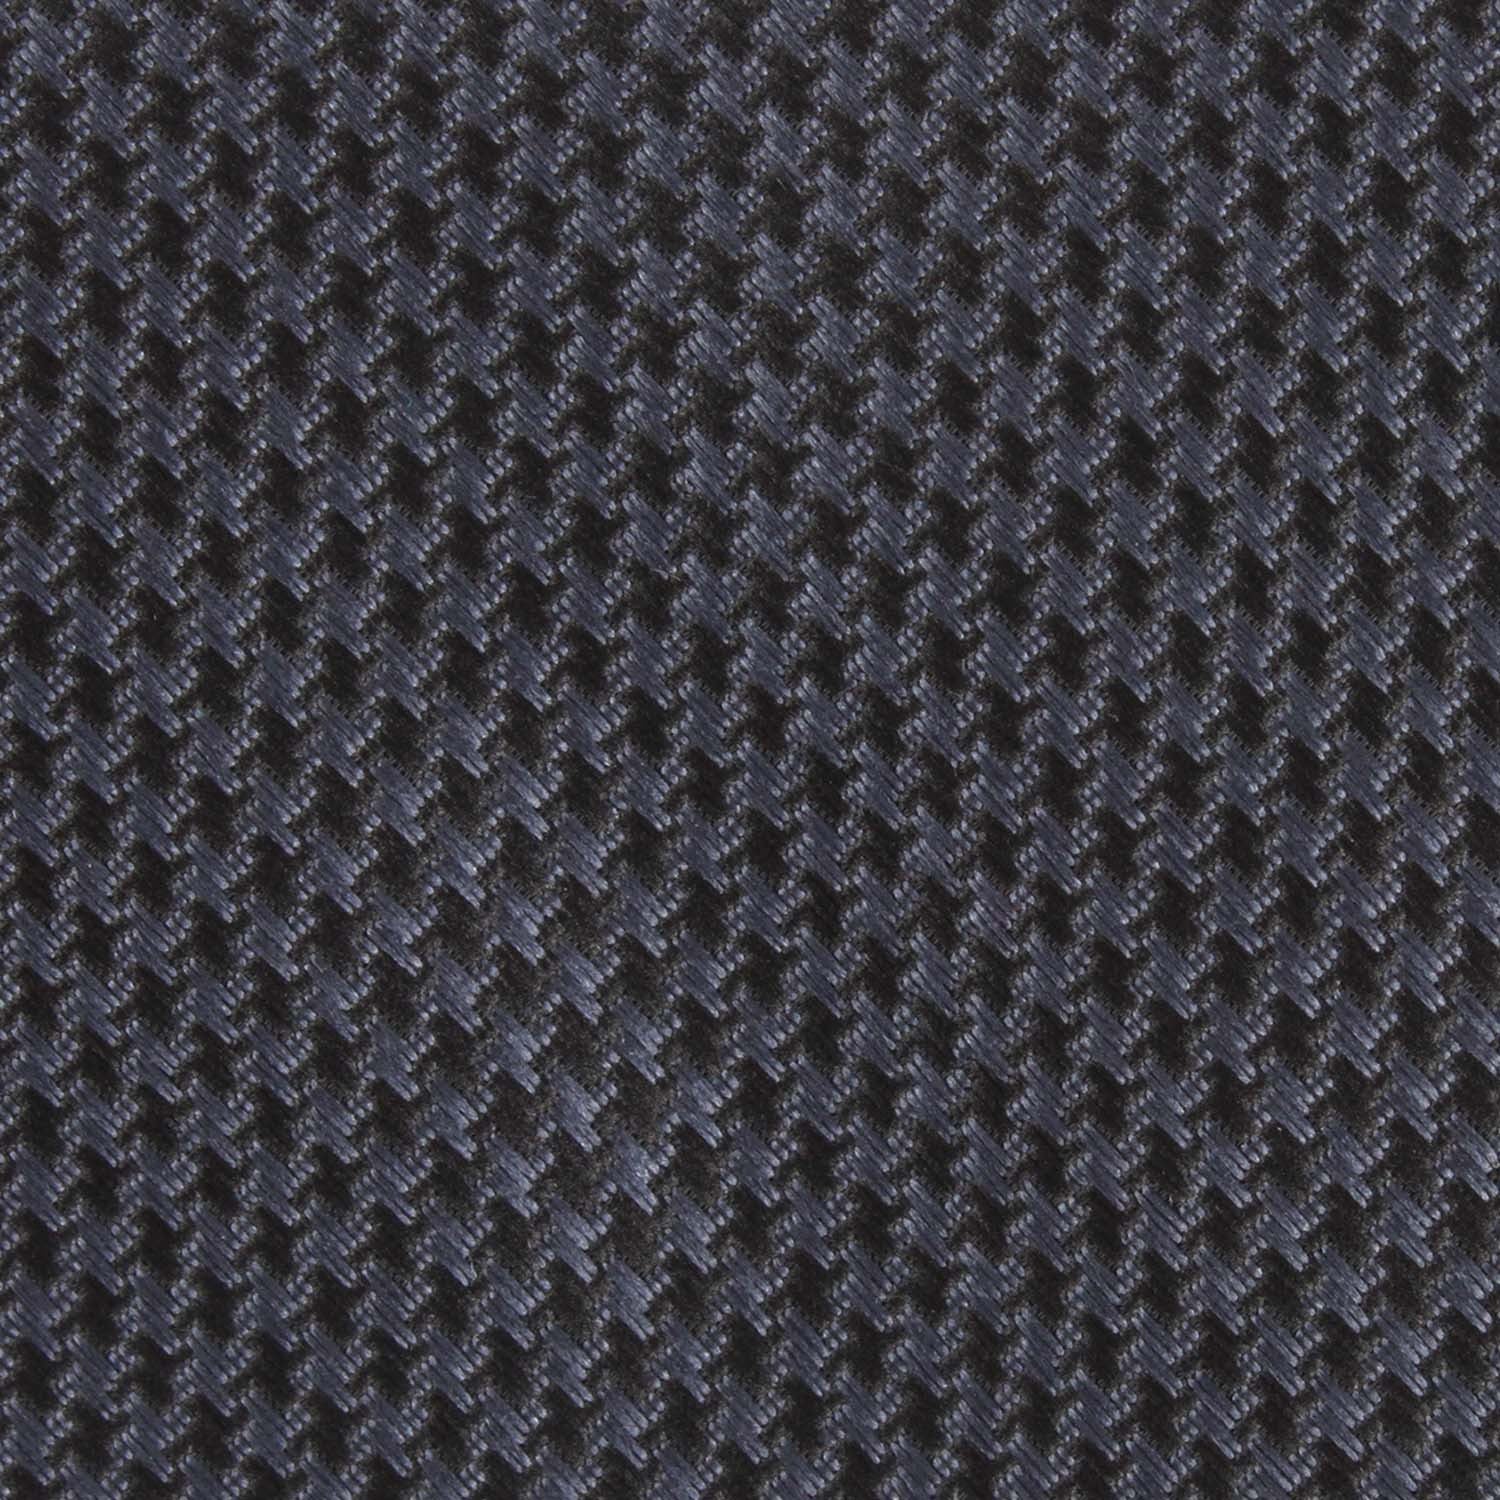 Black Houndstooth Pattern Fabric Skinny Tie M111